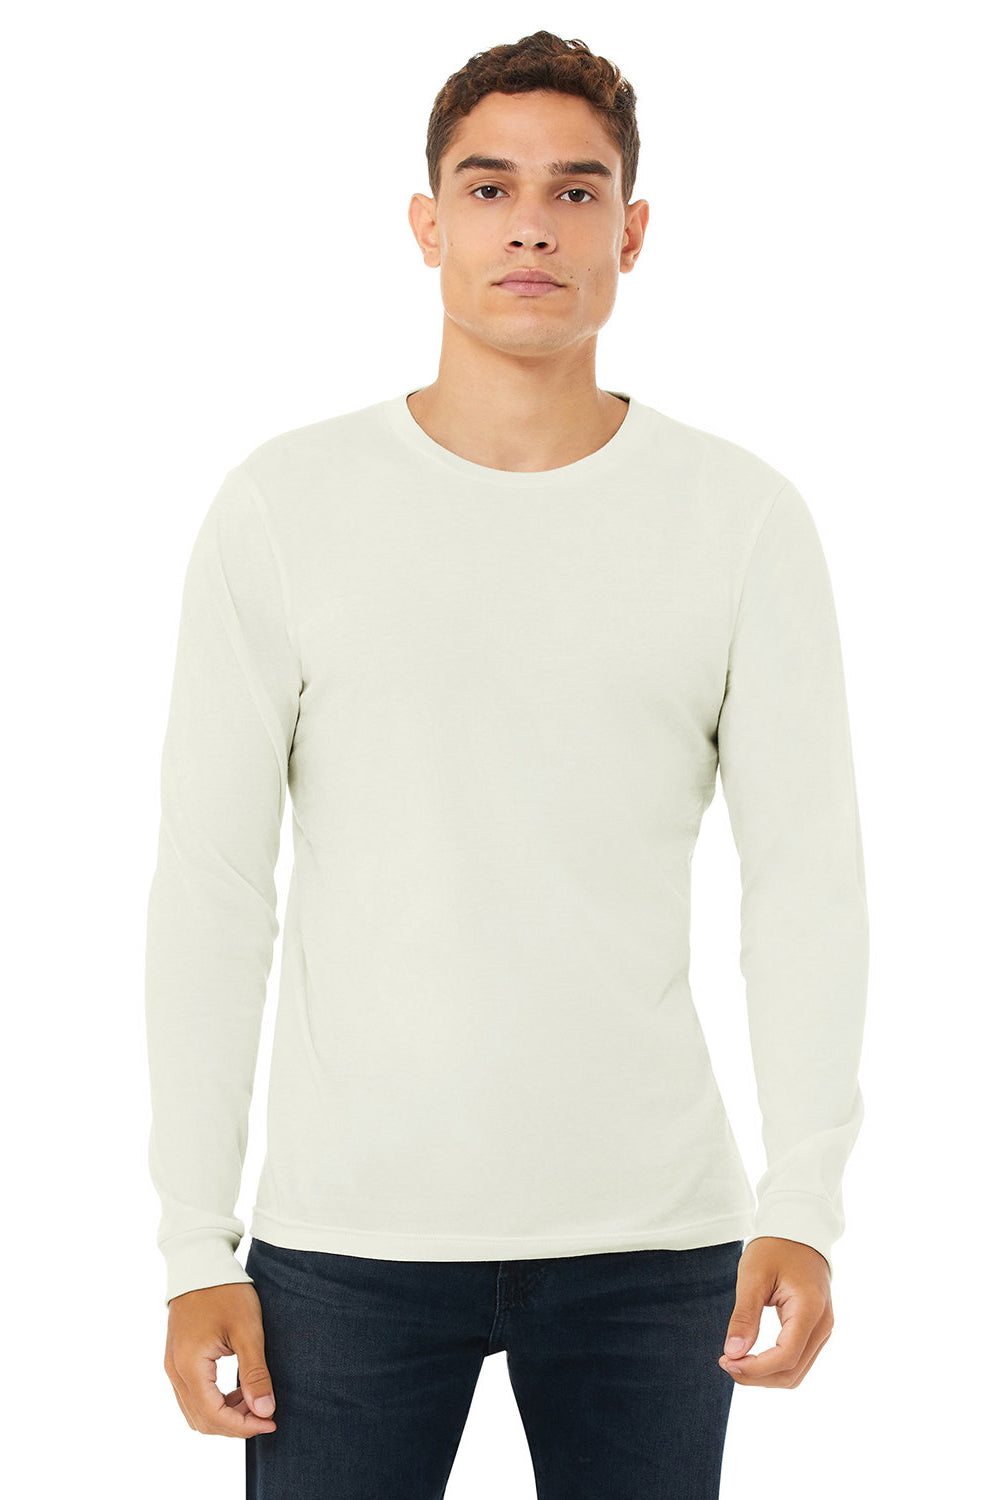 Bella + Canvas BC3501/3501 Mens Jersey Long Sleeve Crewneck T-Shirt Citron Model Front